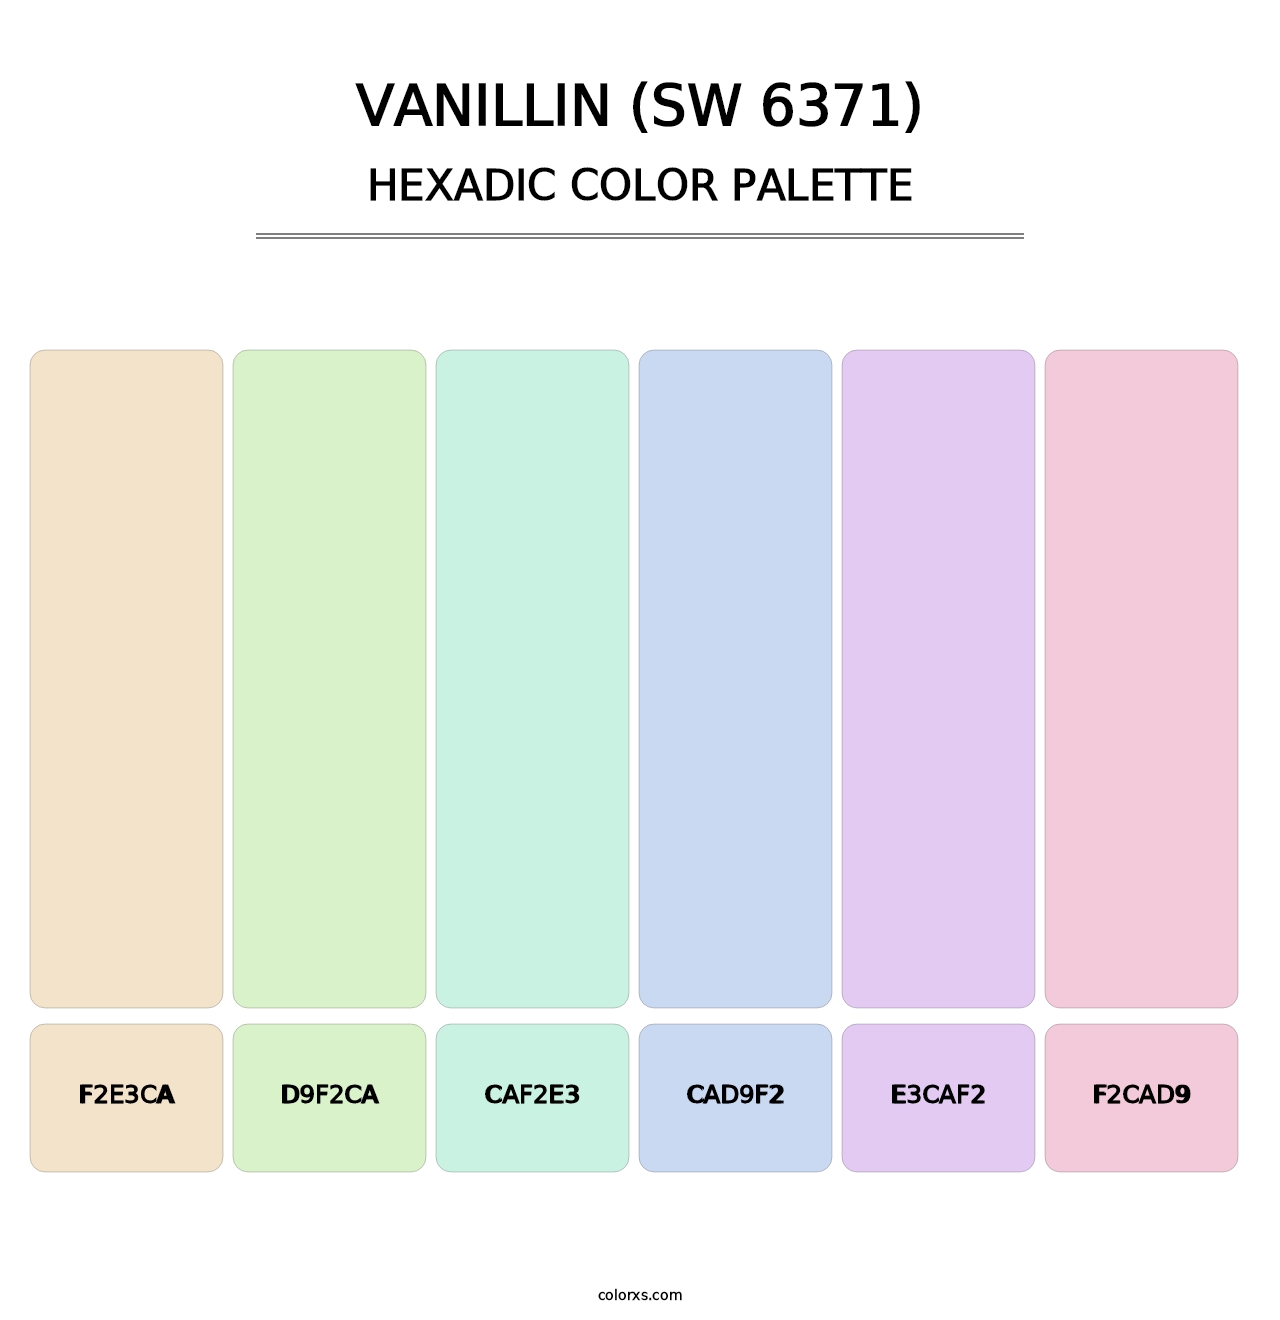 Vanillin (SW 6371) - Hexadic Color Palette